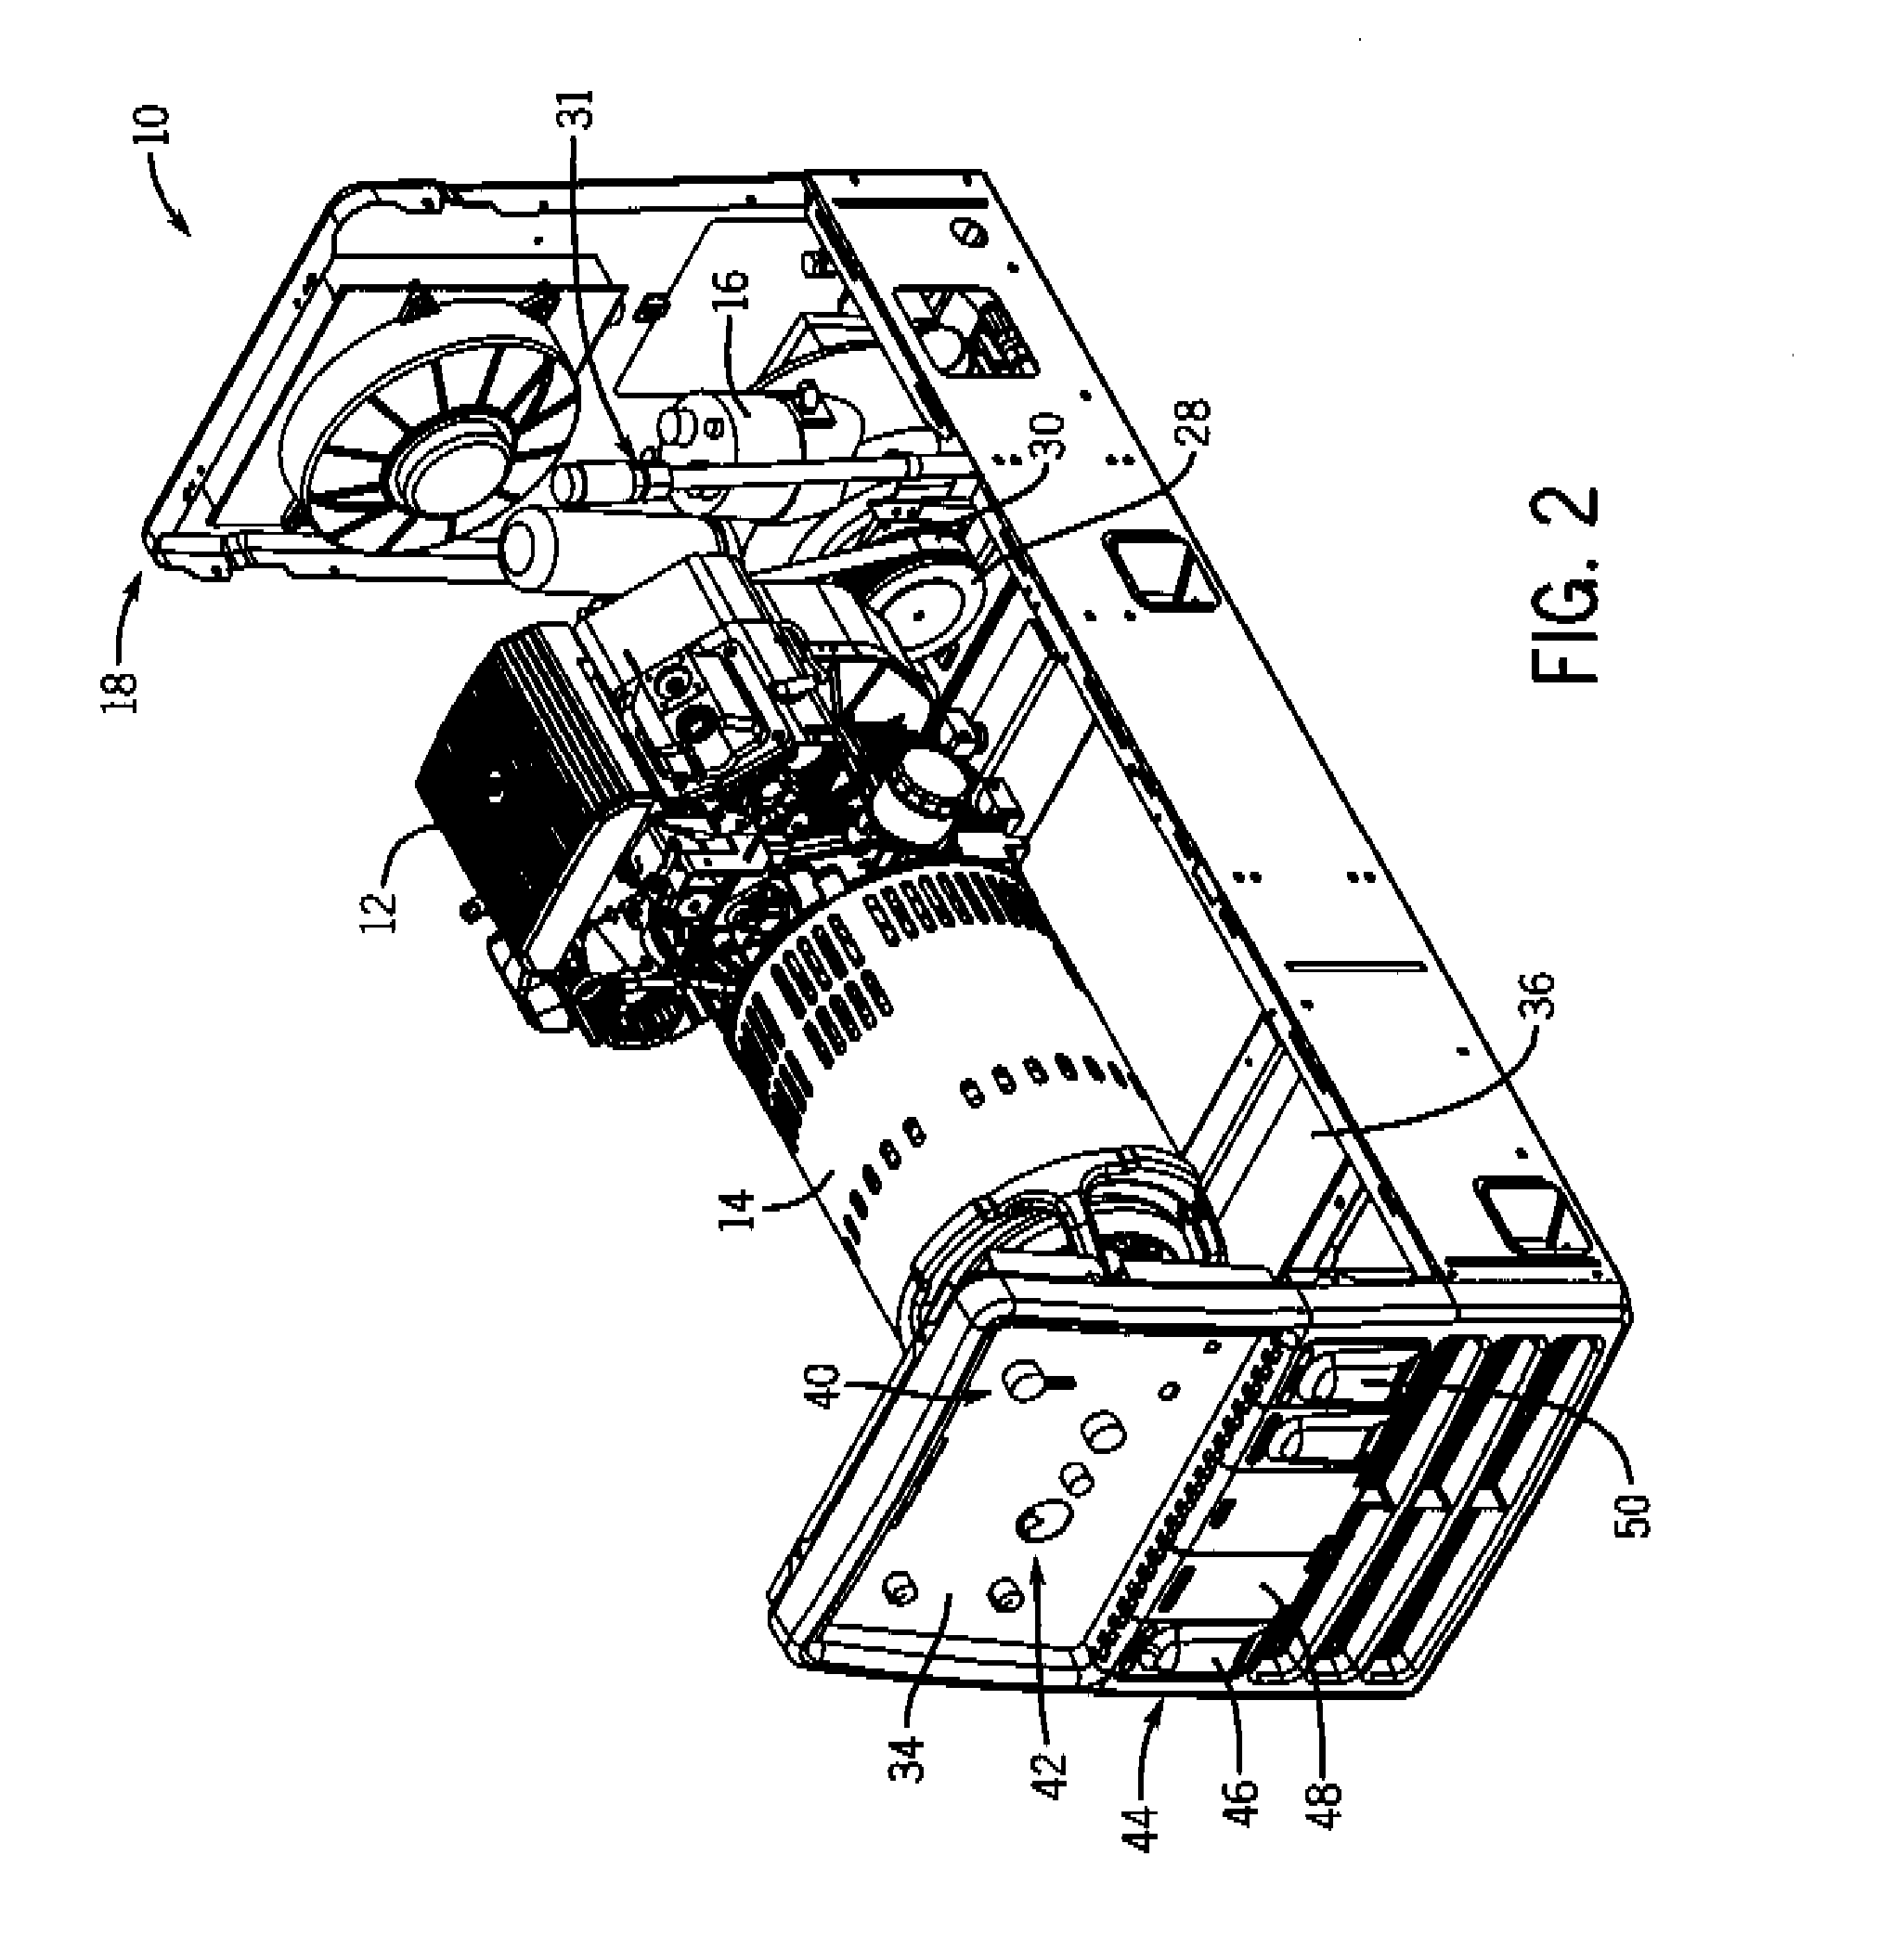 Portable Generator and Air Compressor Mounting Arrangement